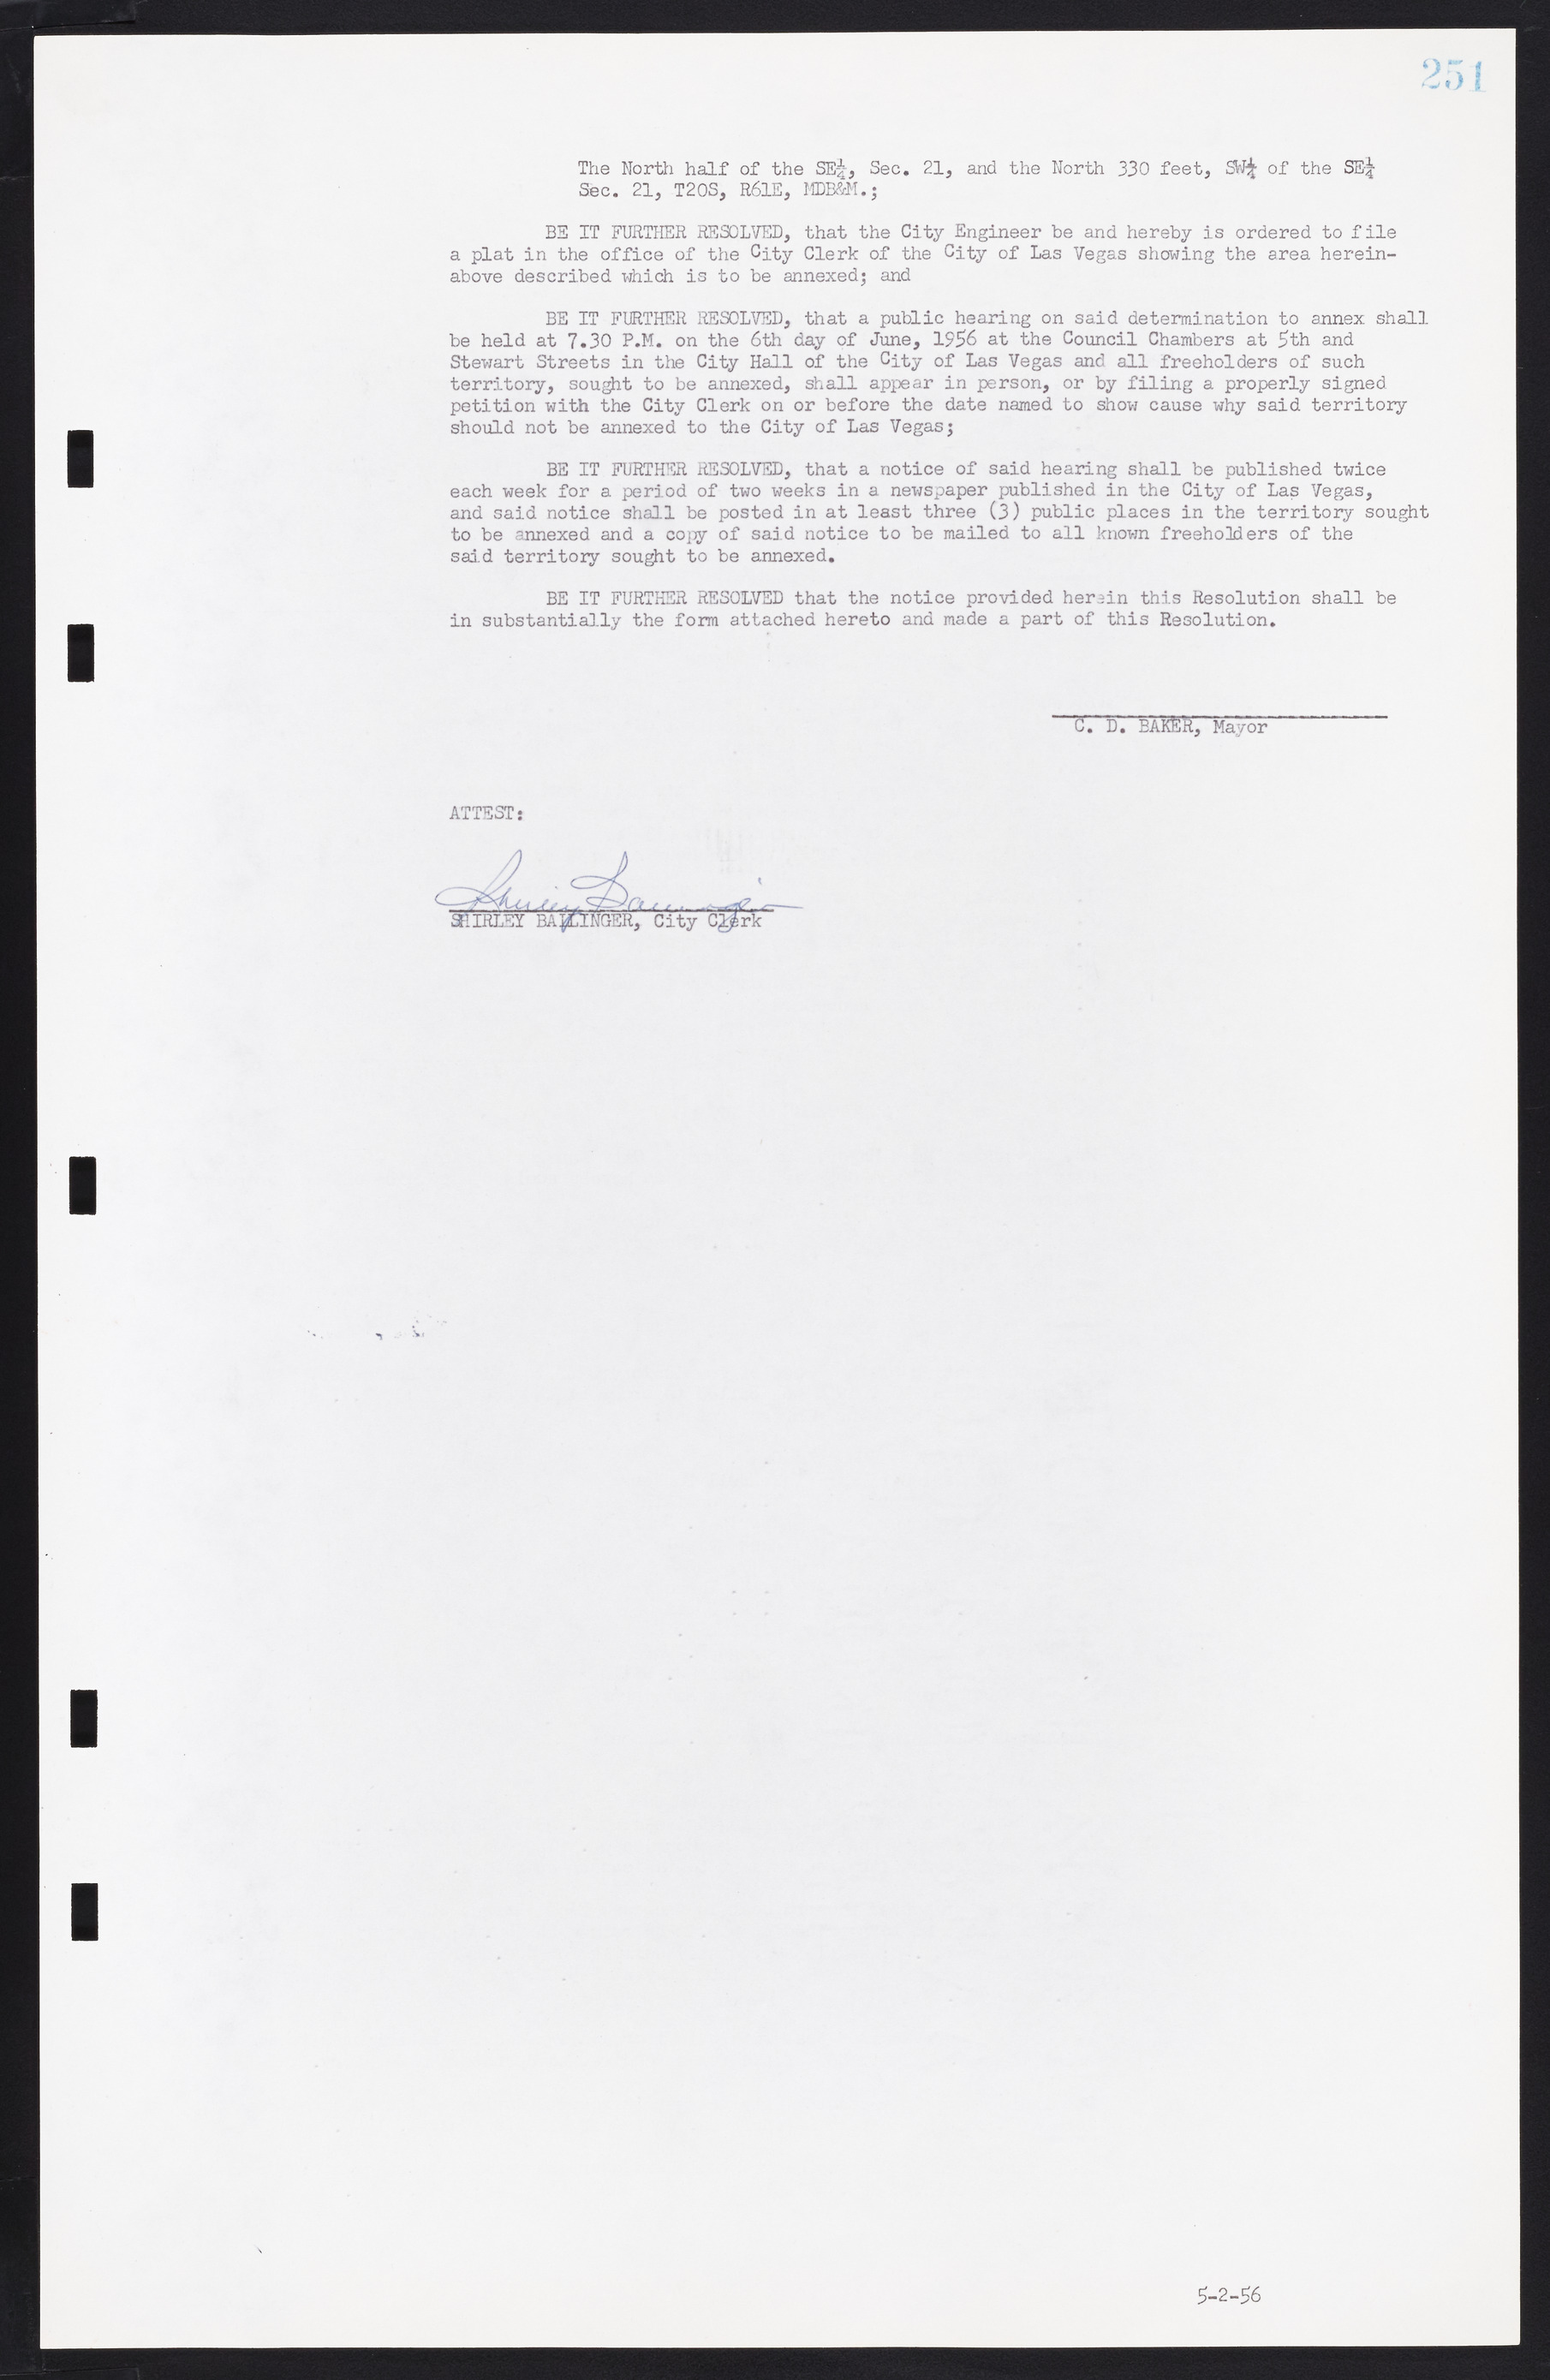 Las Vegas City Commission Minutes, September 21, 1955 to November 20, 1957, lvc000010-271